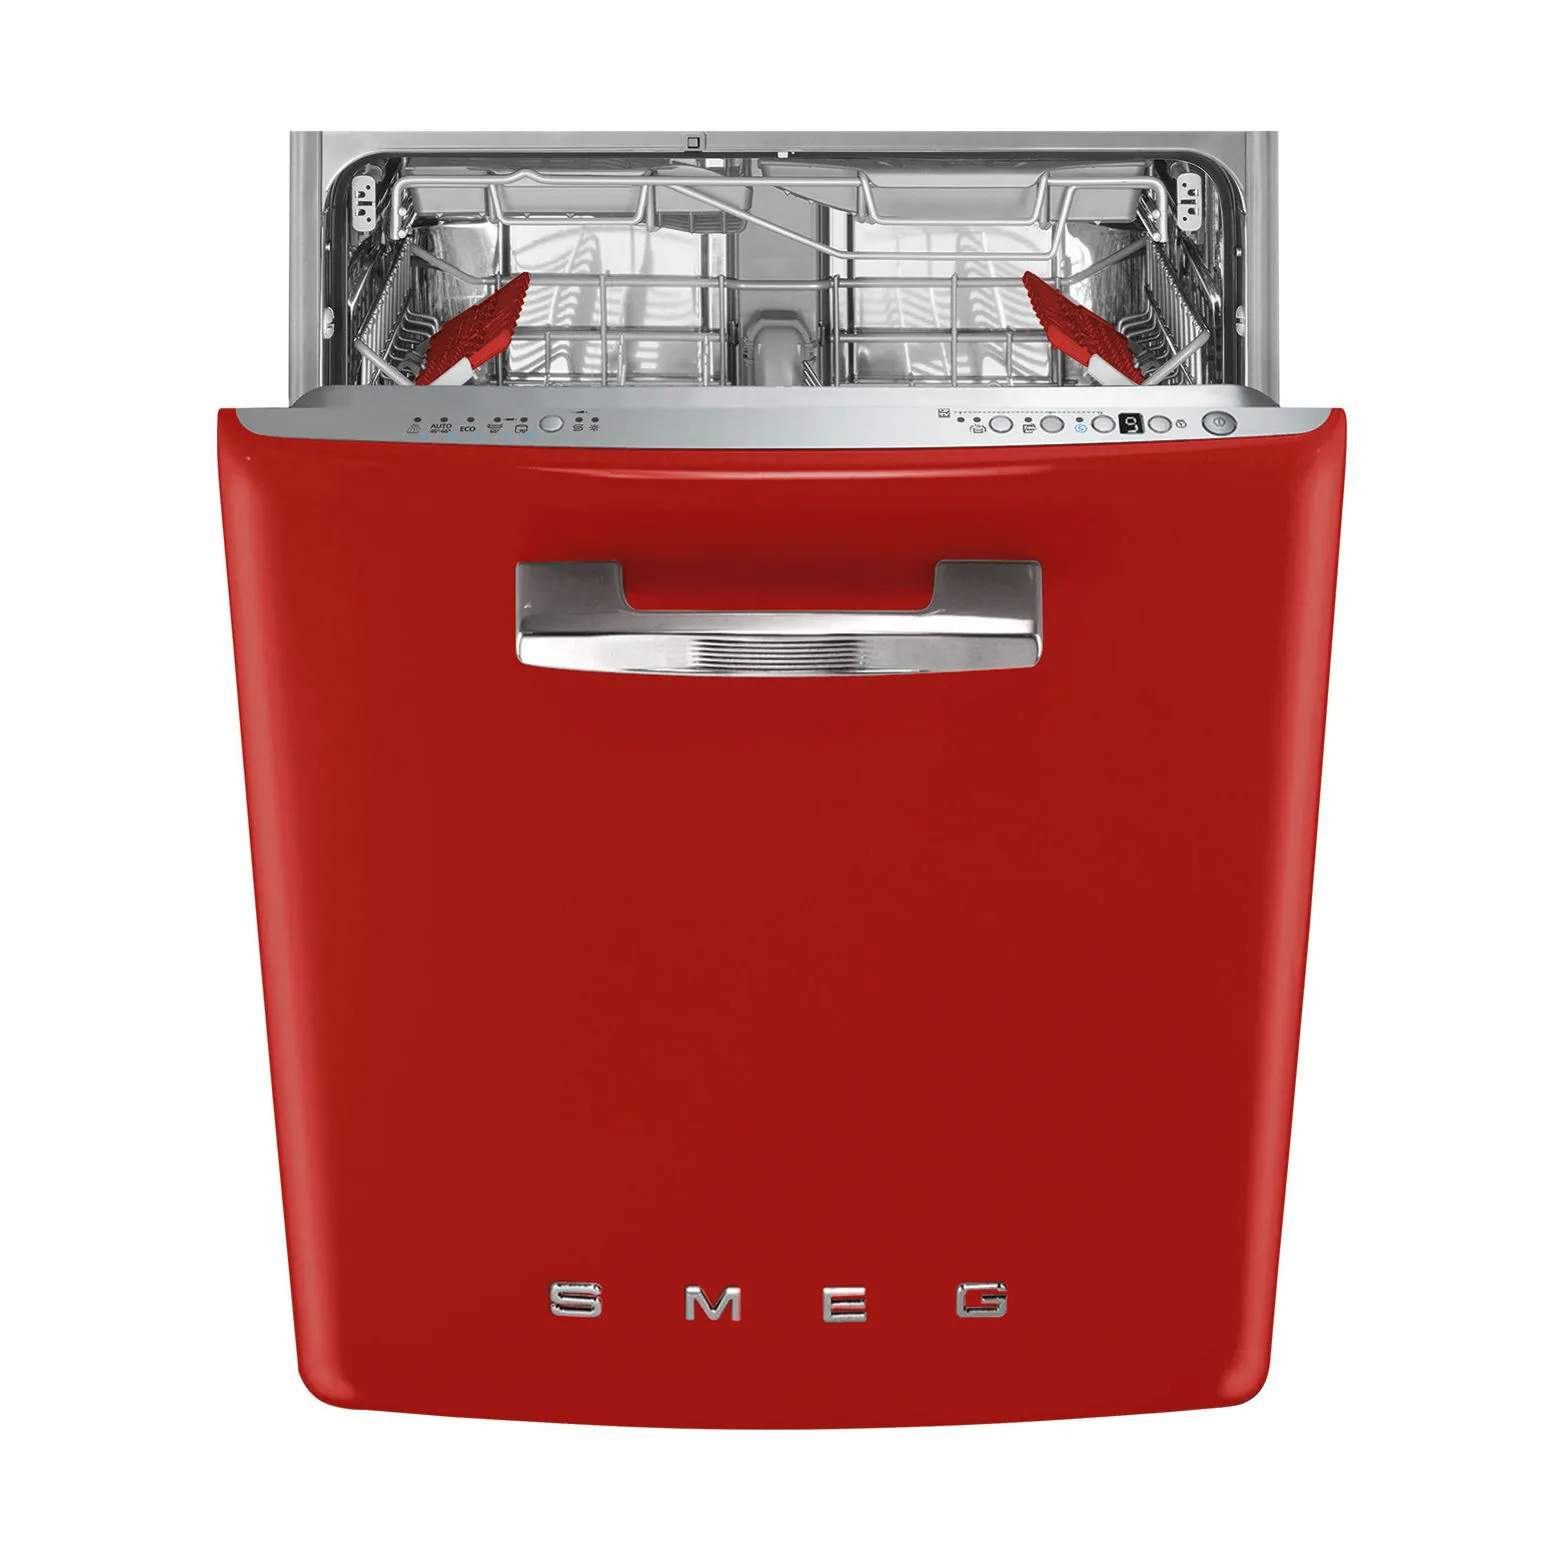 50's Style Opvaskemaskine, rød, large